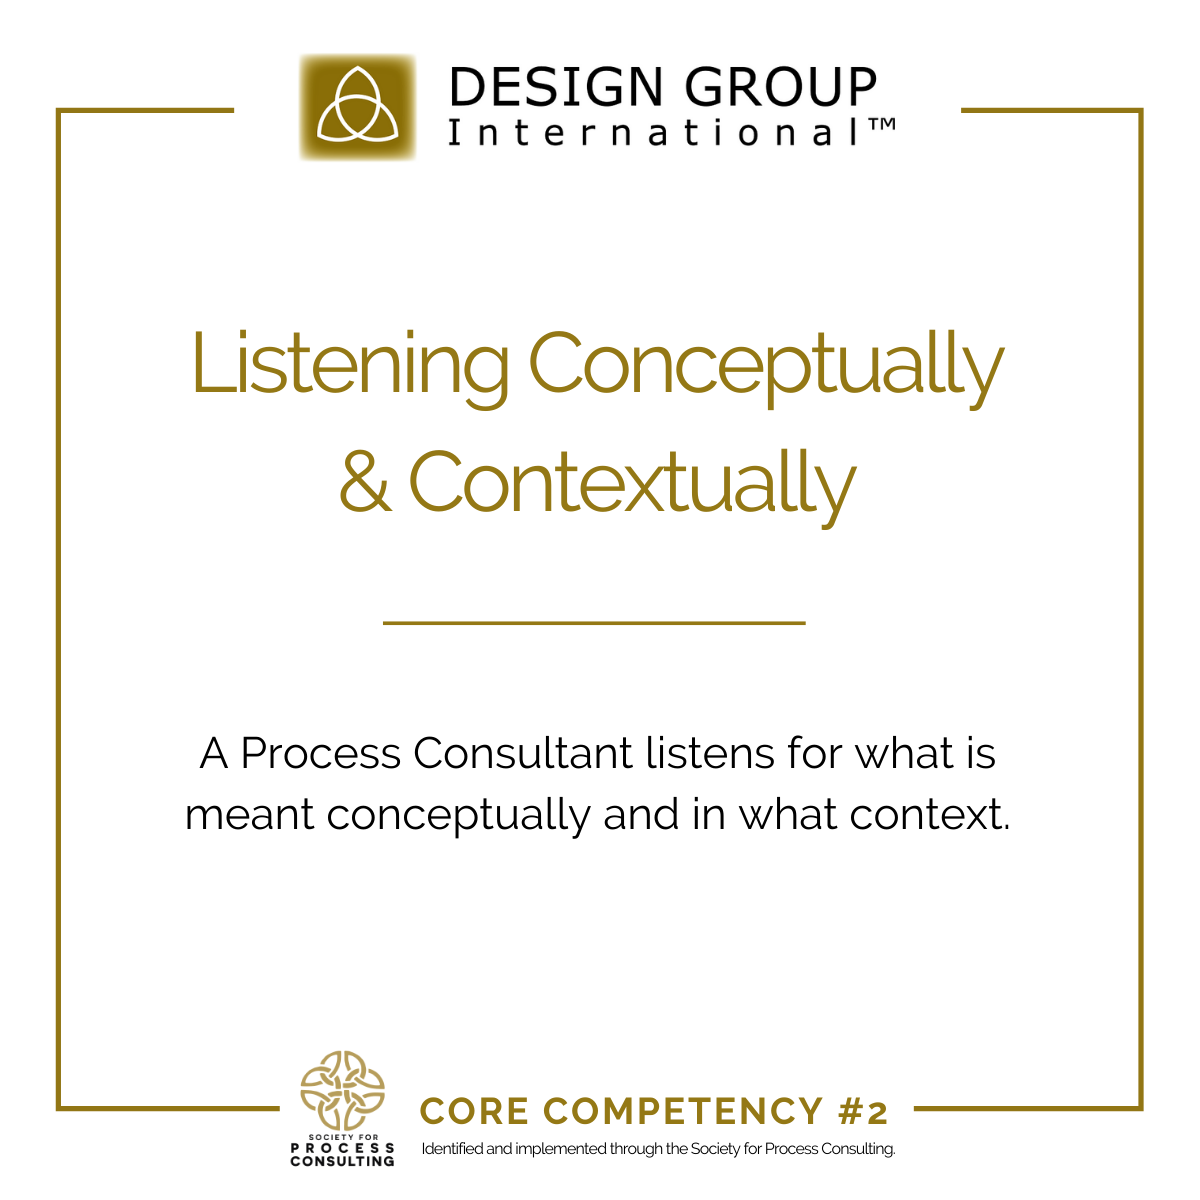 DGI - Core Competency #2